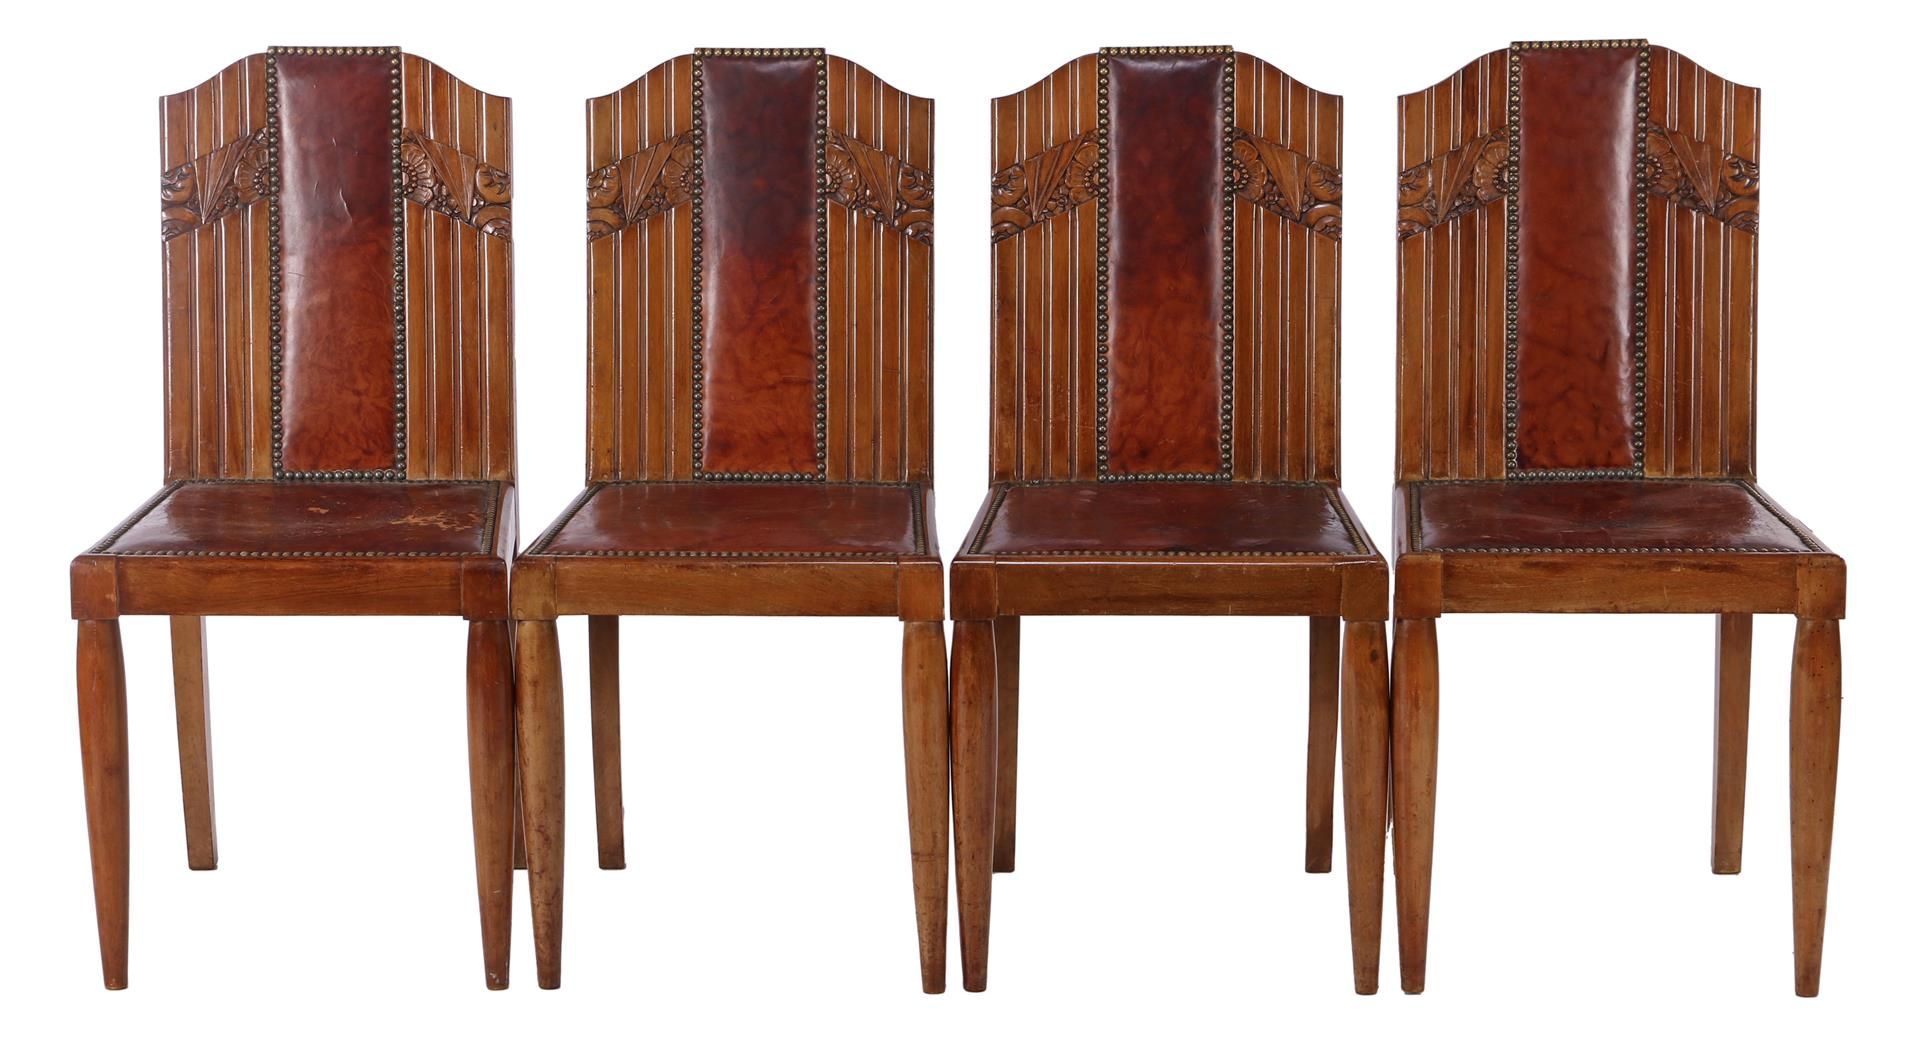 Null 4 把胡桃木餐椅，带缝线、棕色皮革软垫靠背和座椅，饰以铜钉，约制作于 1930 年。